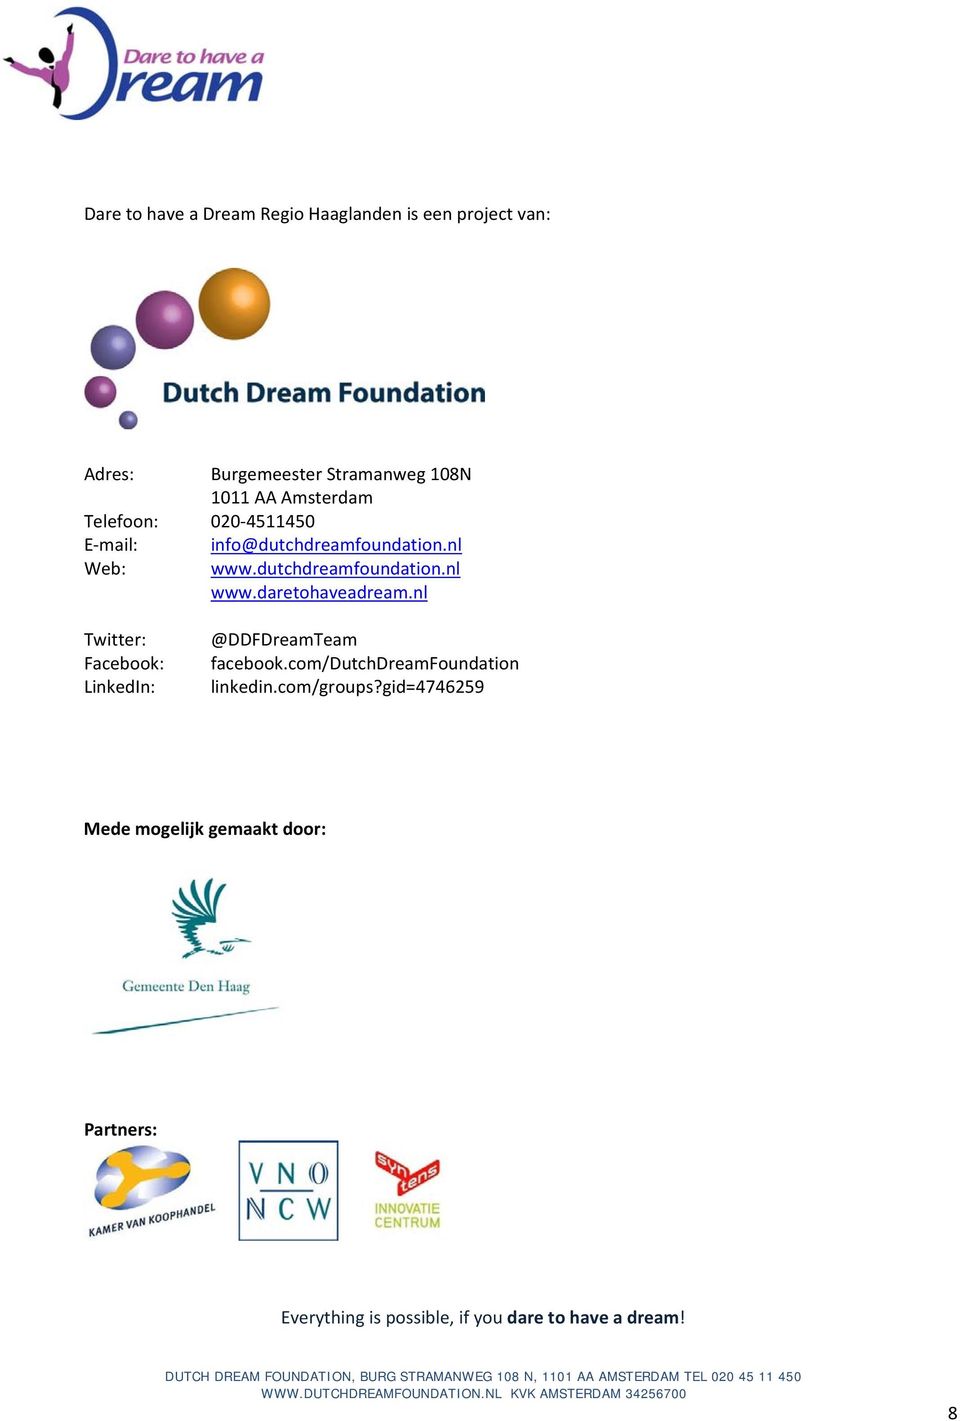 dutchdreamfoundation.nl www.daretohaveadream.